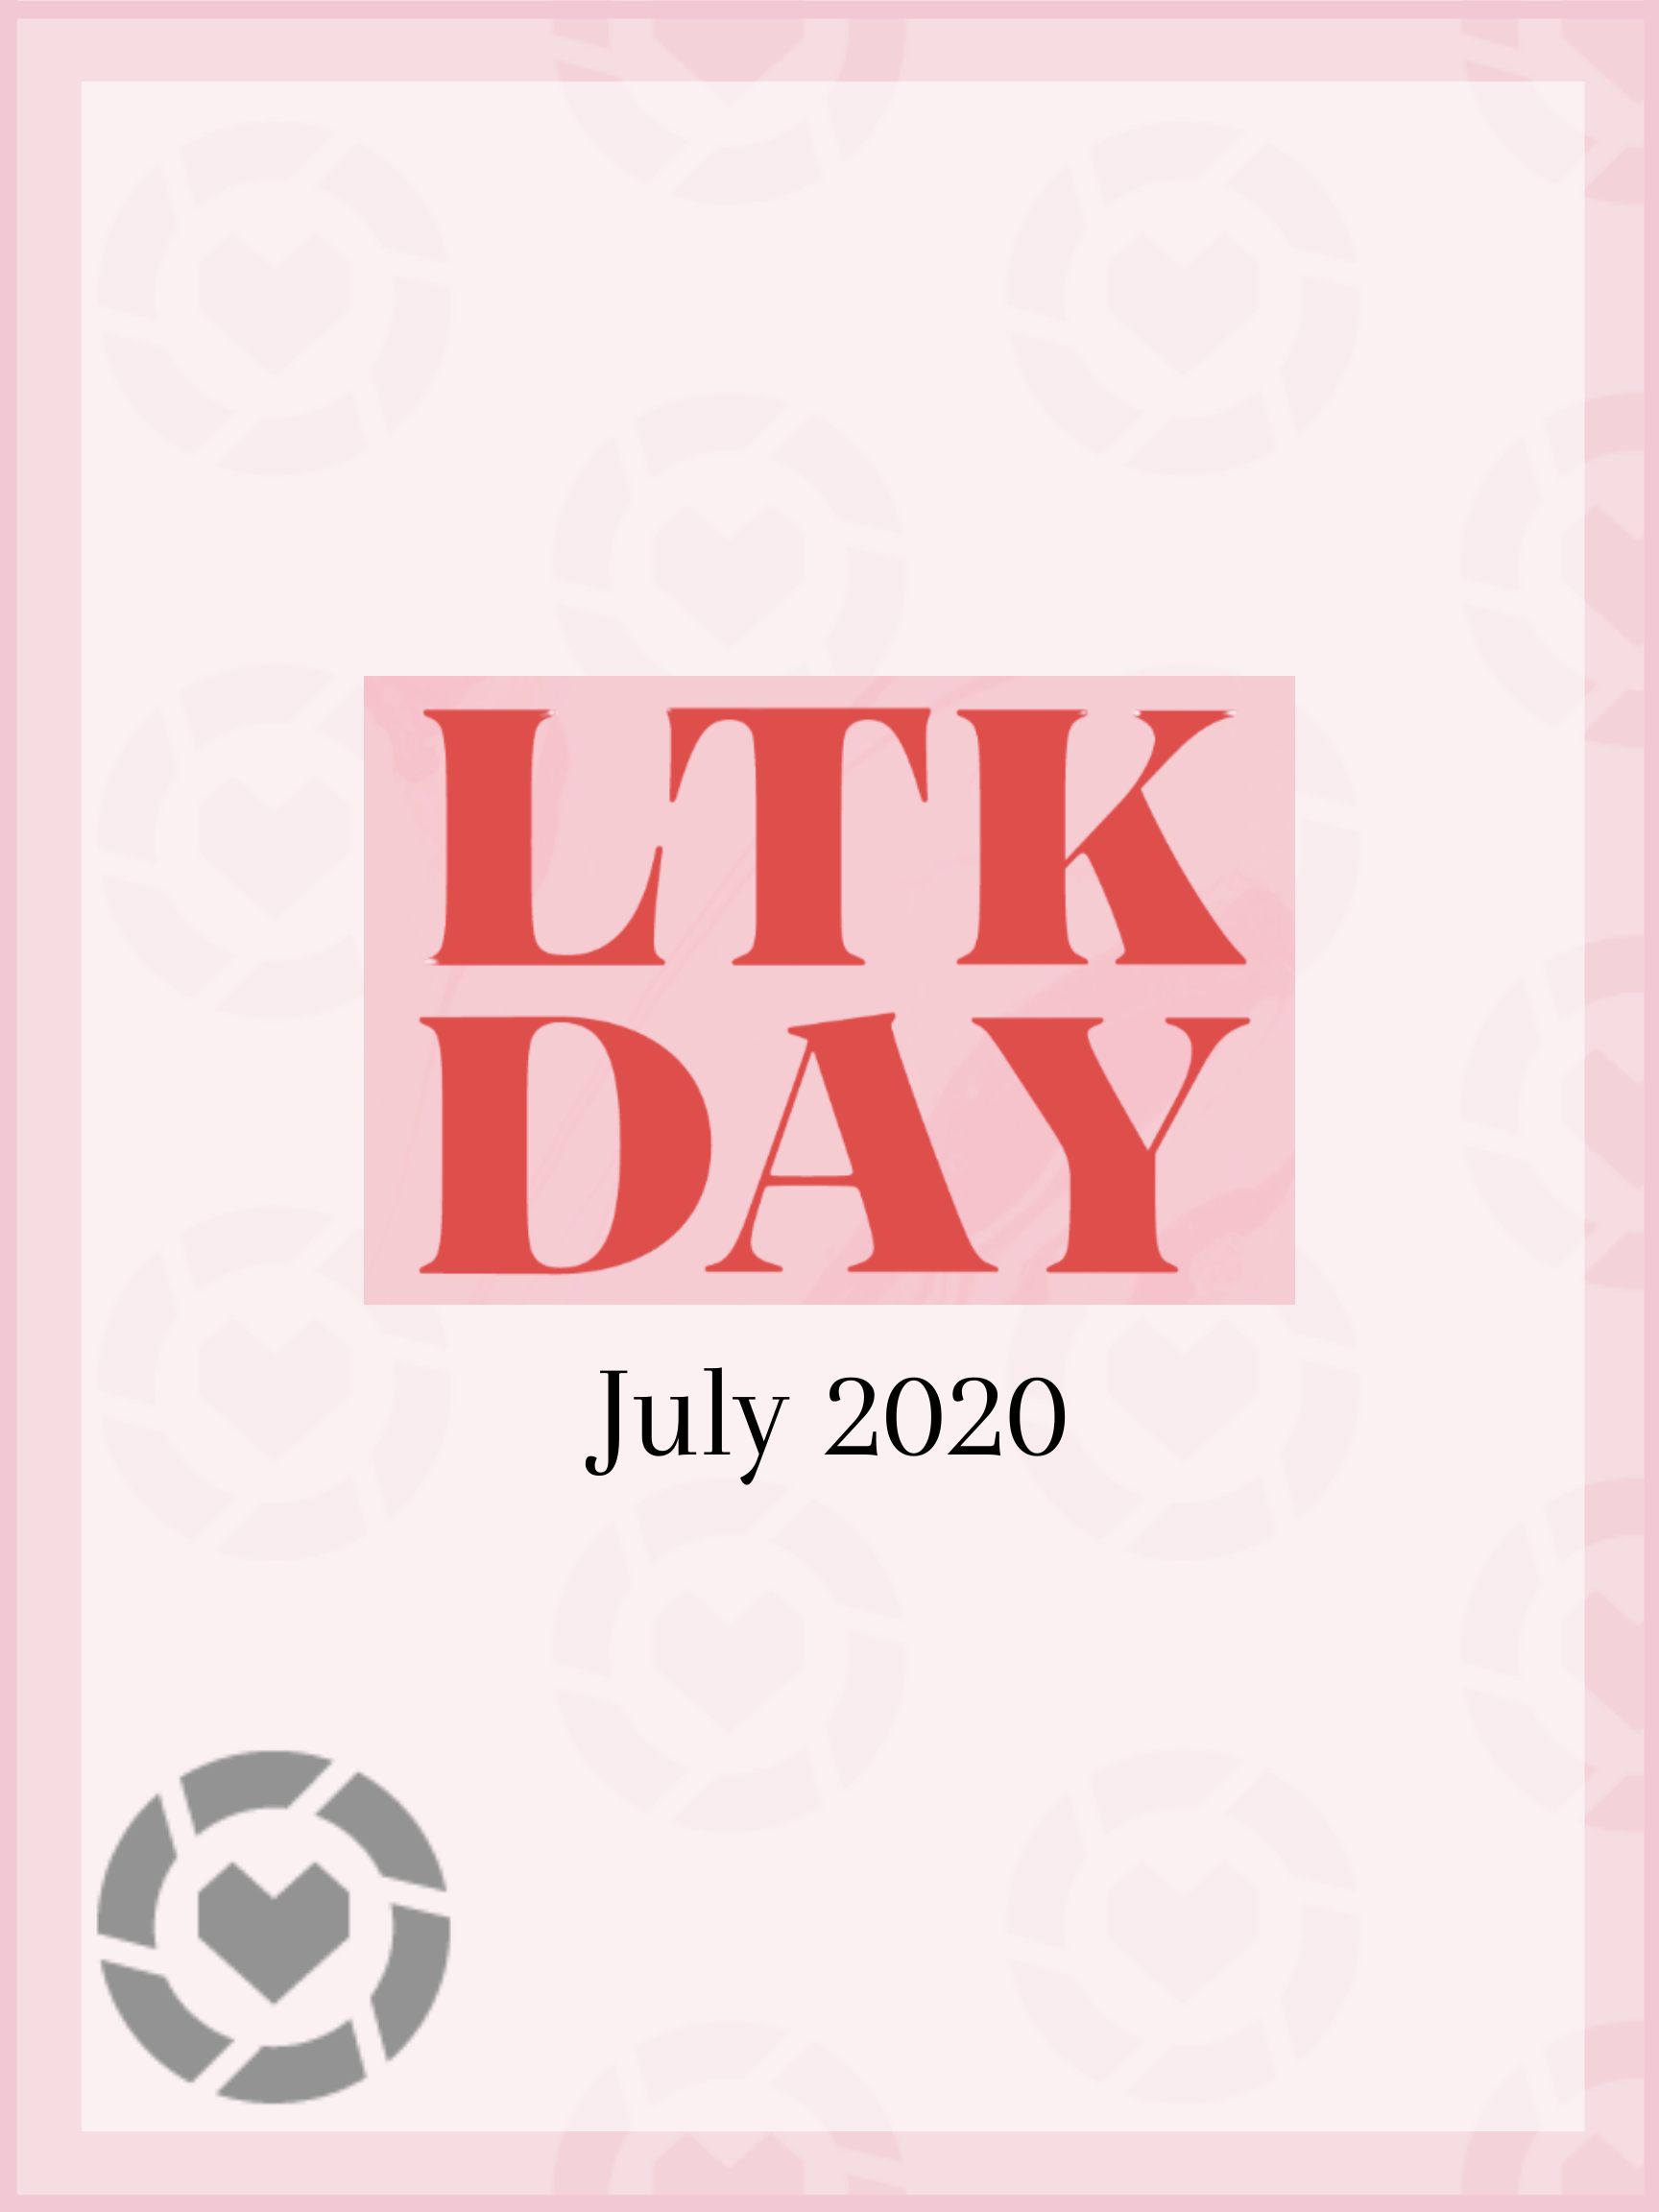 LTK DAY – July 2020